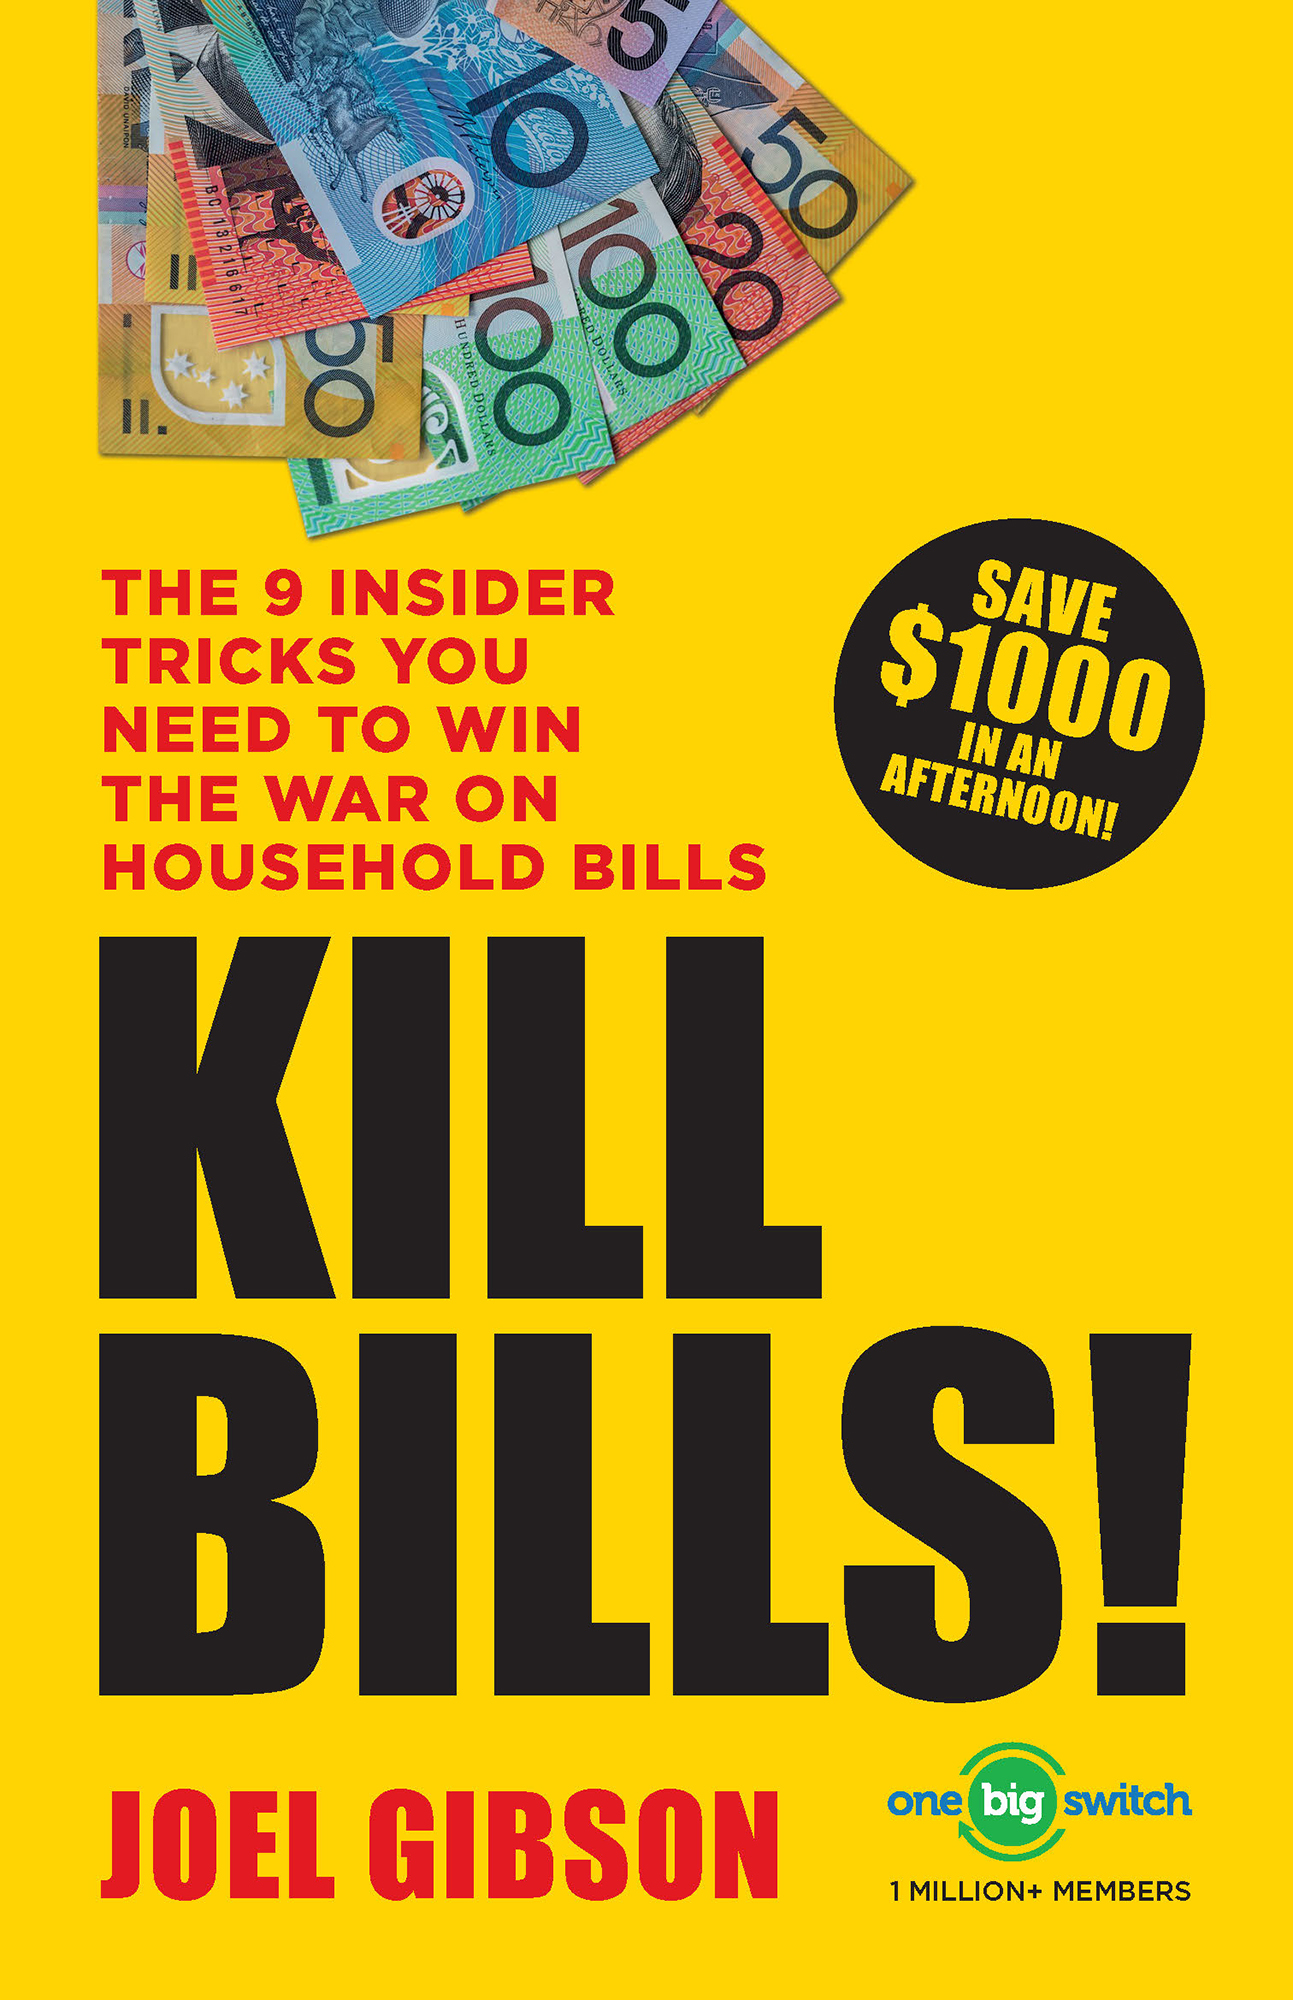 KILL BILLSThe 9 insider tricks you need to win the war on household bills - photo 1